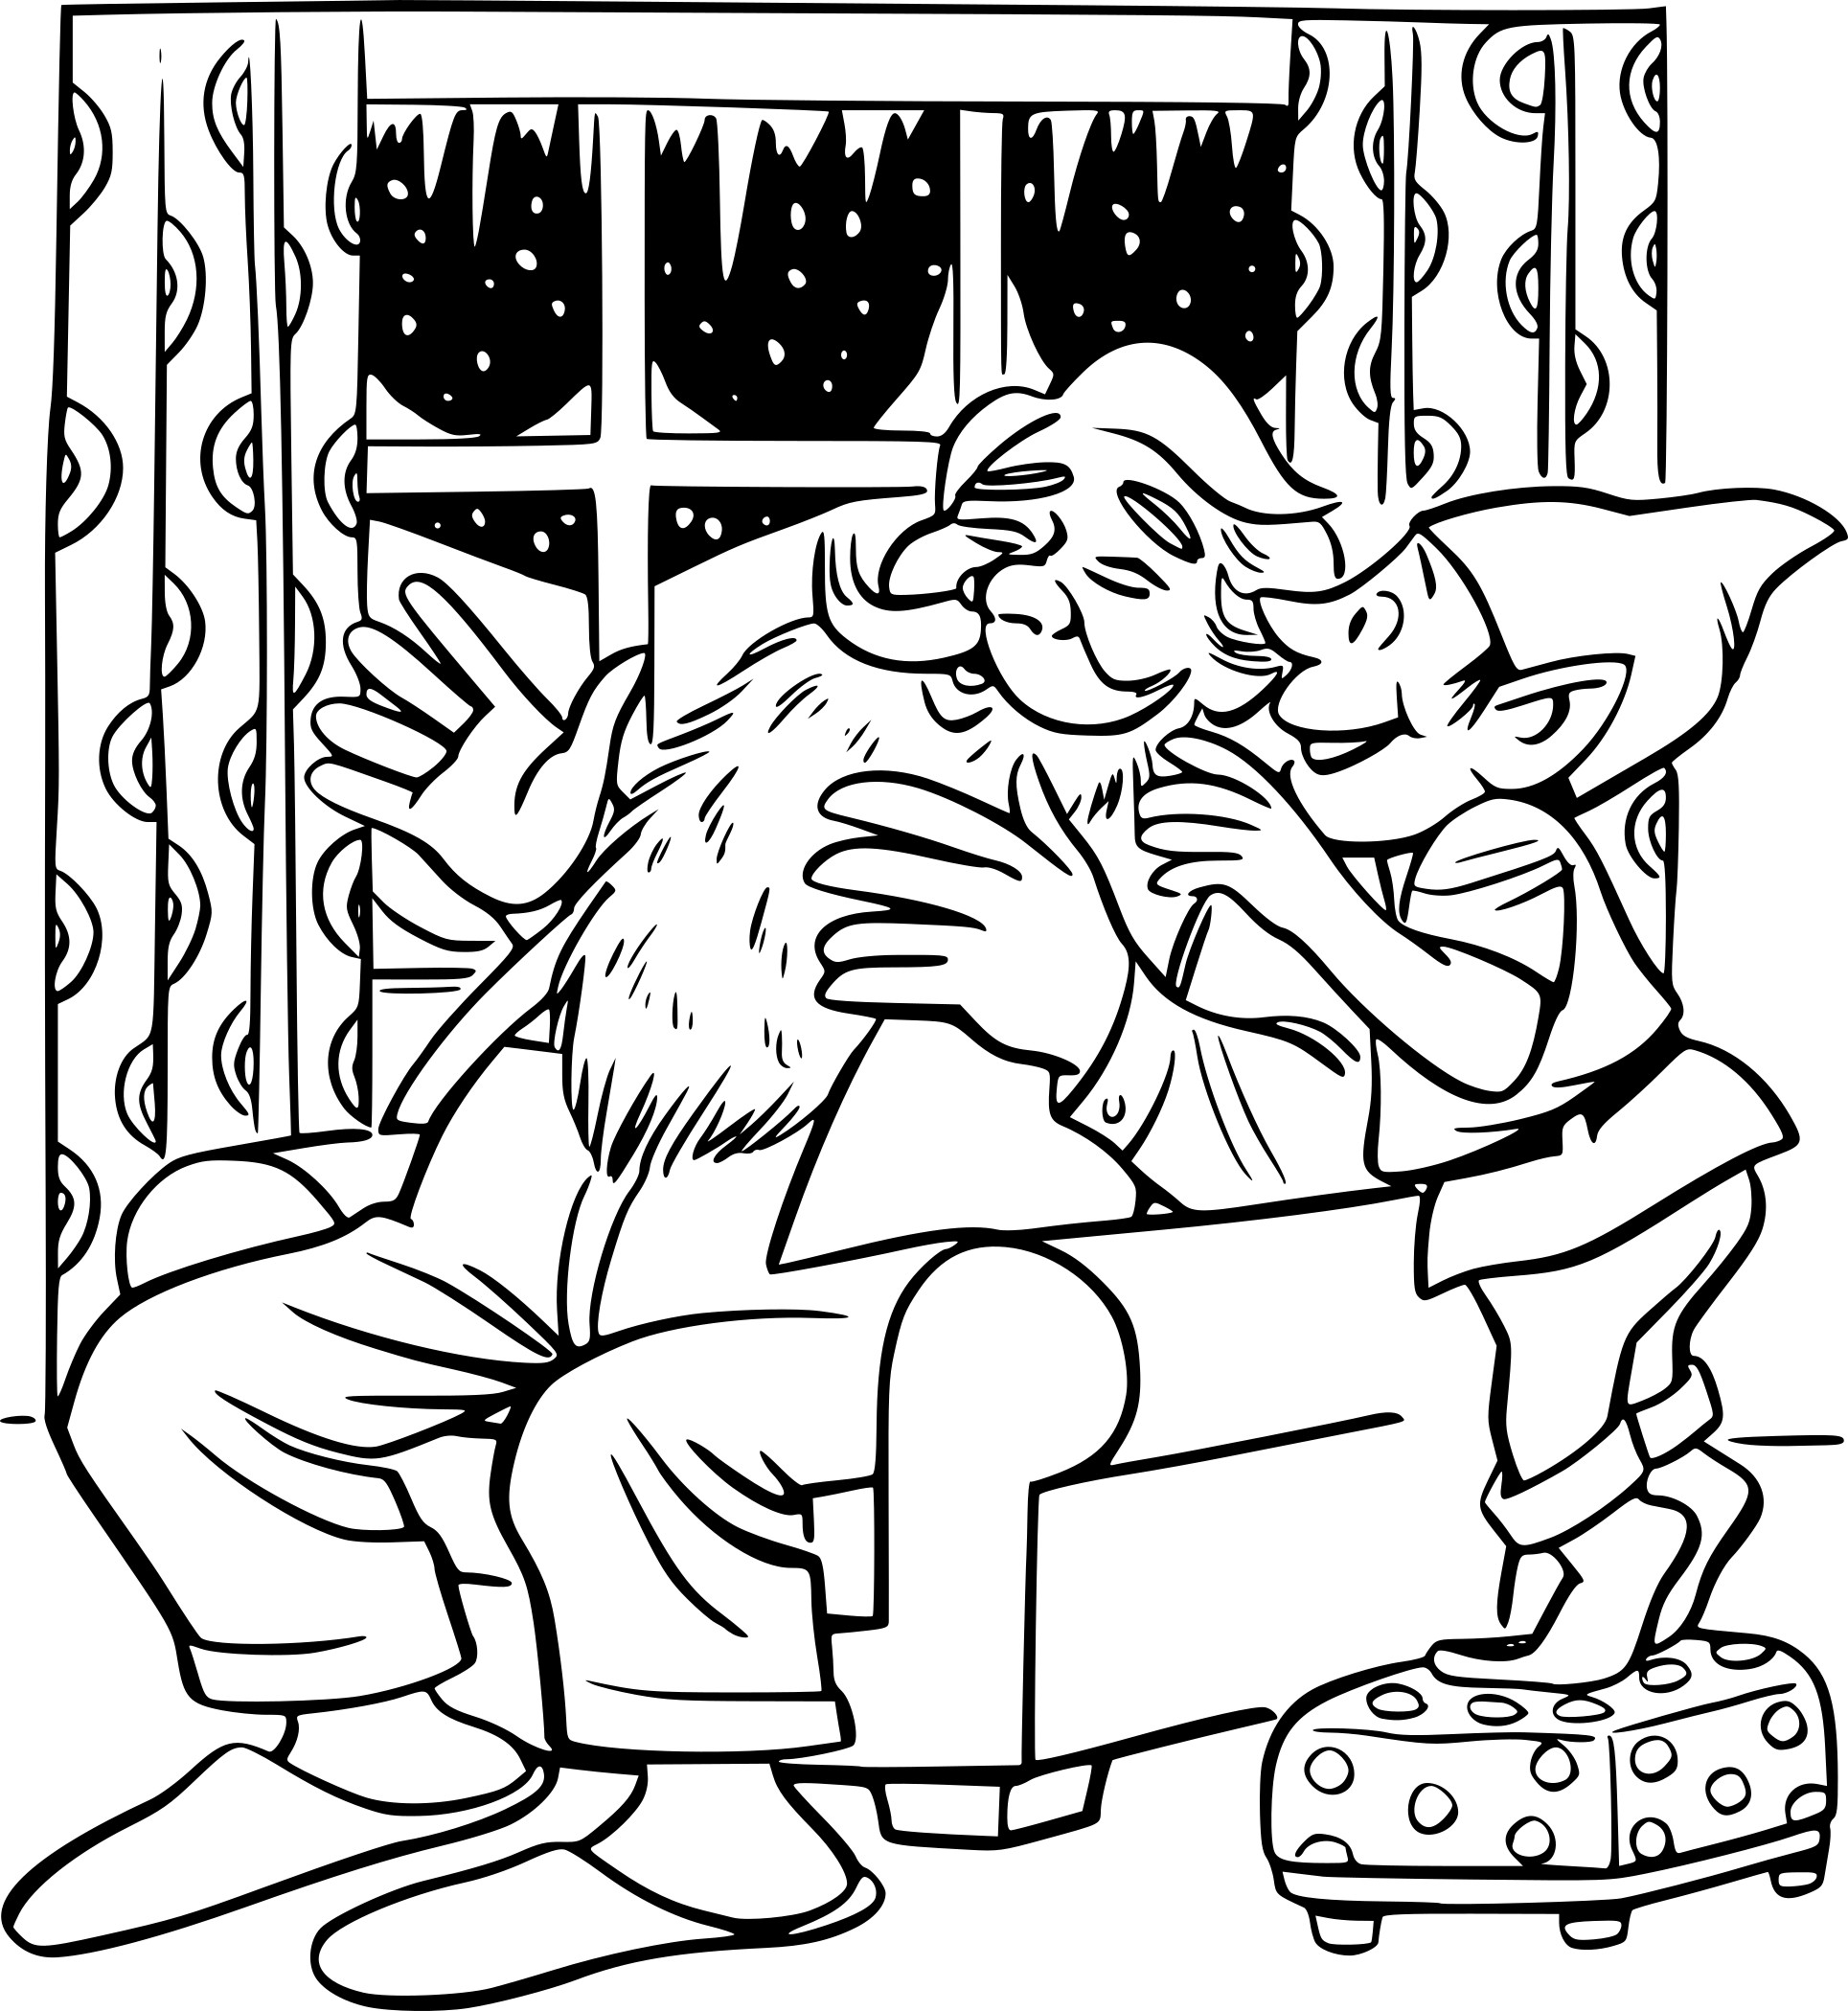 Santa Claus And Elf coloring page